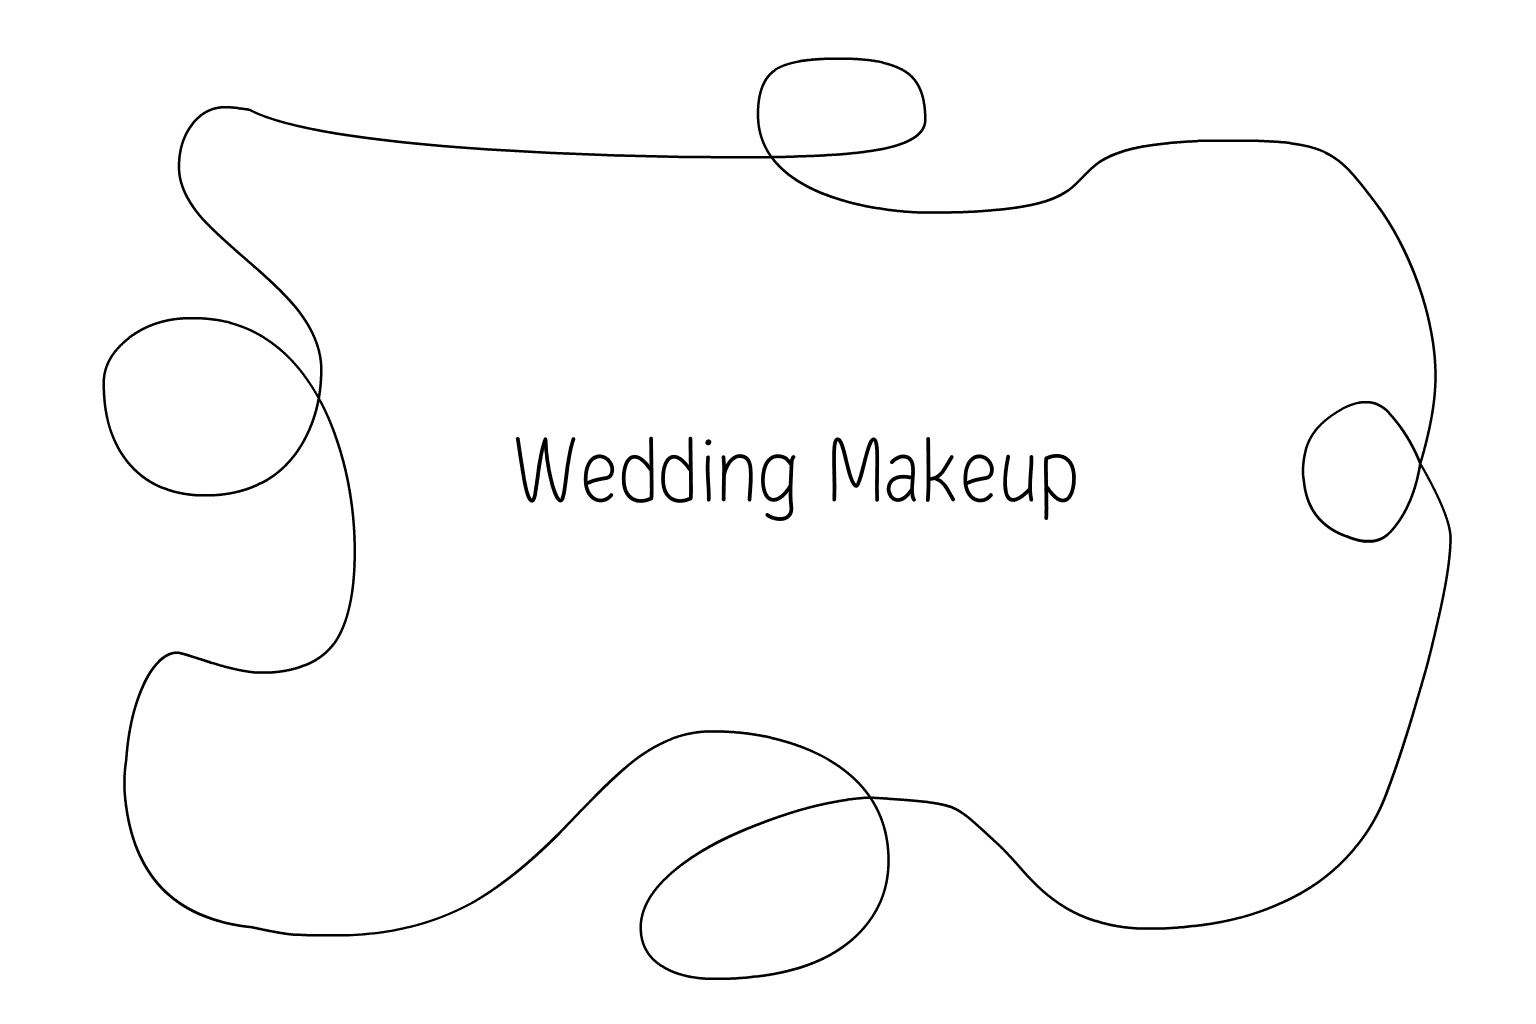 Illustration of Wedding Makeup